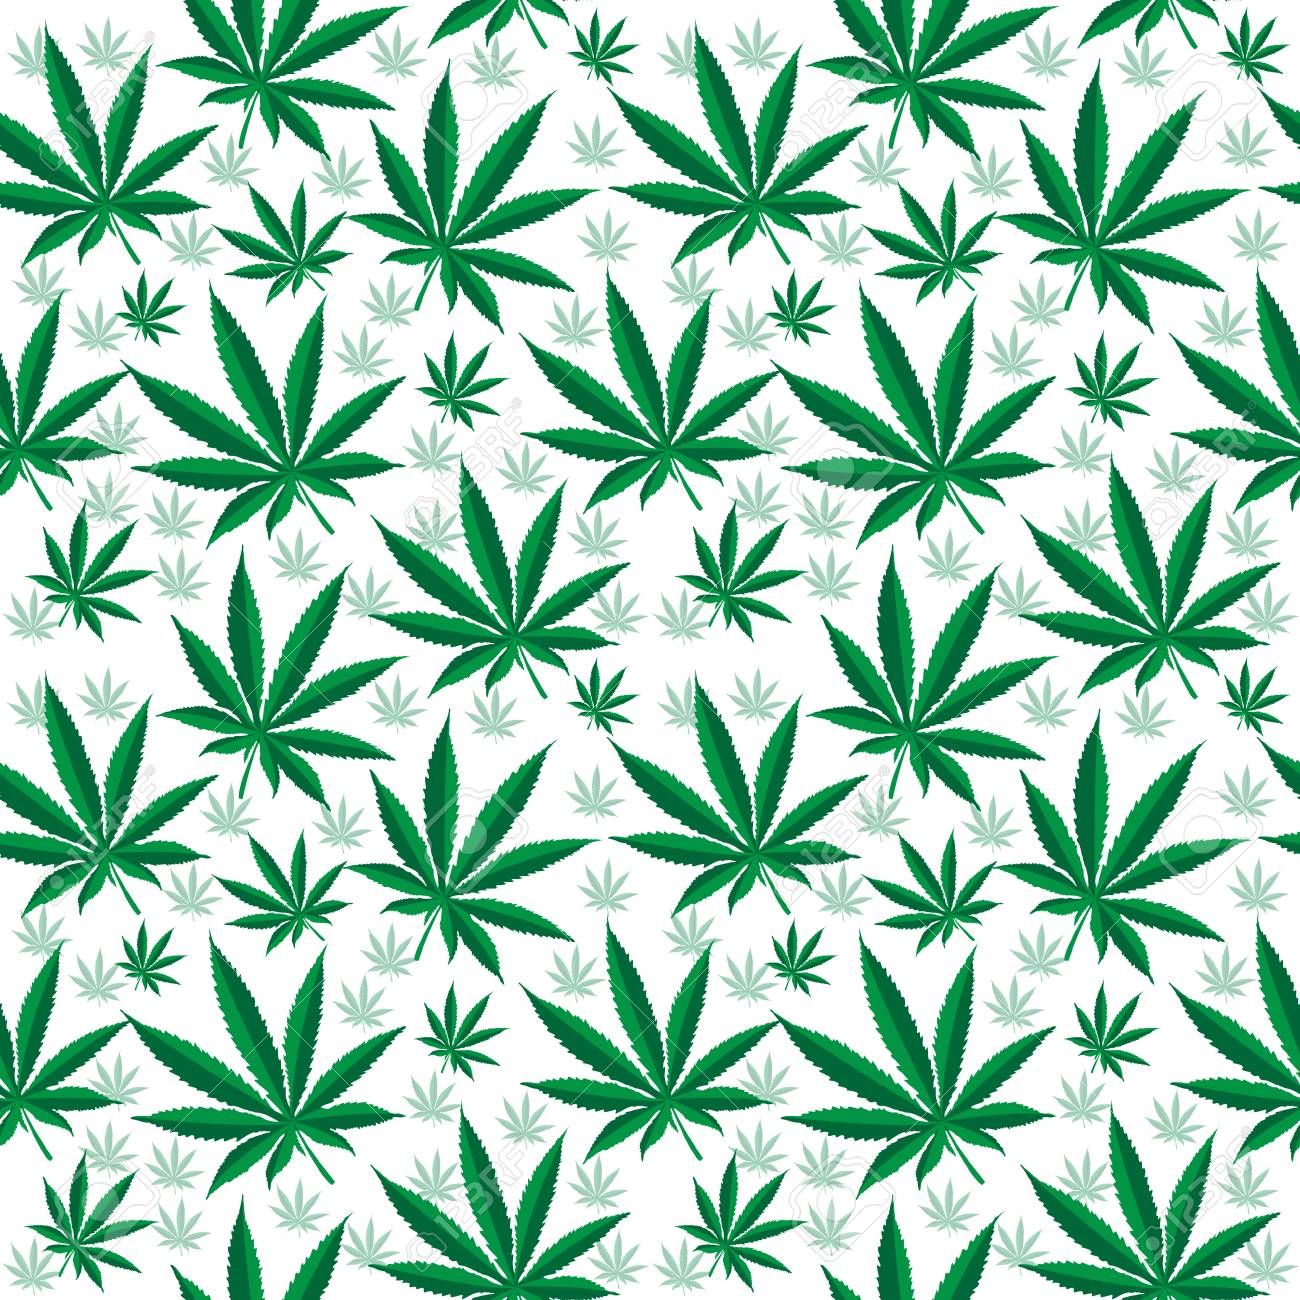 Free download Medical Cannabis Seamless Texture Hemp Background